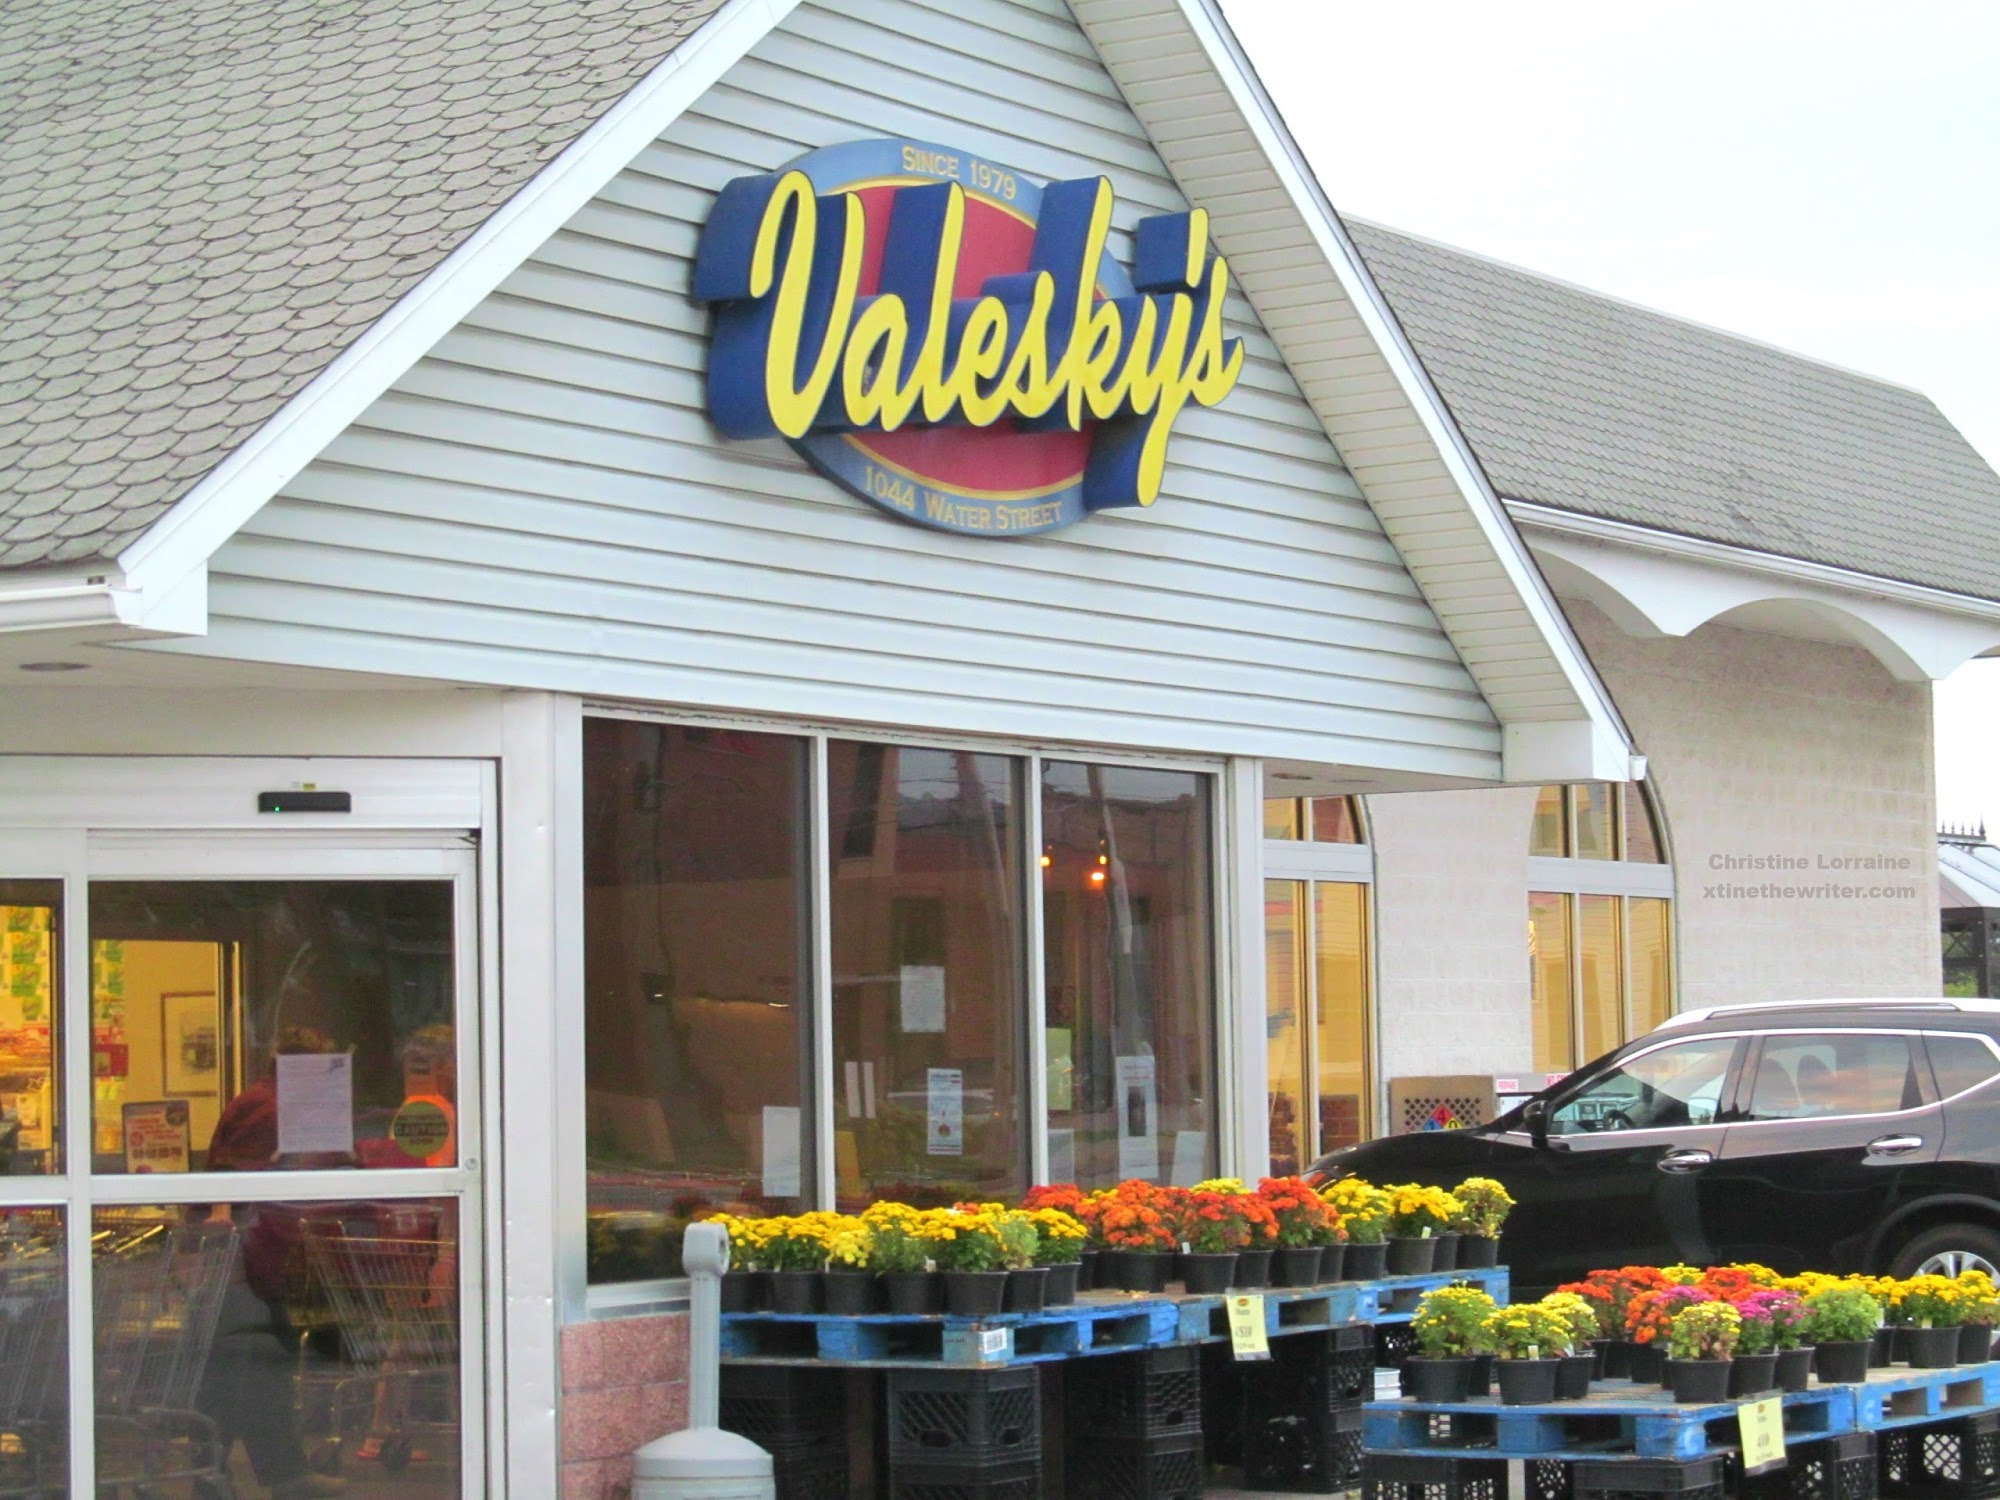 Valesky's